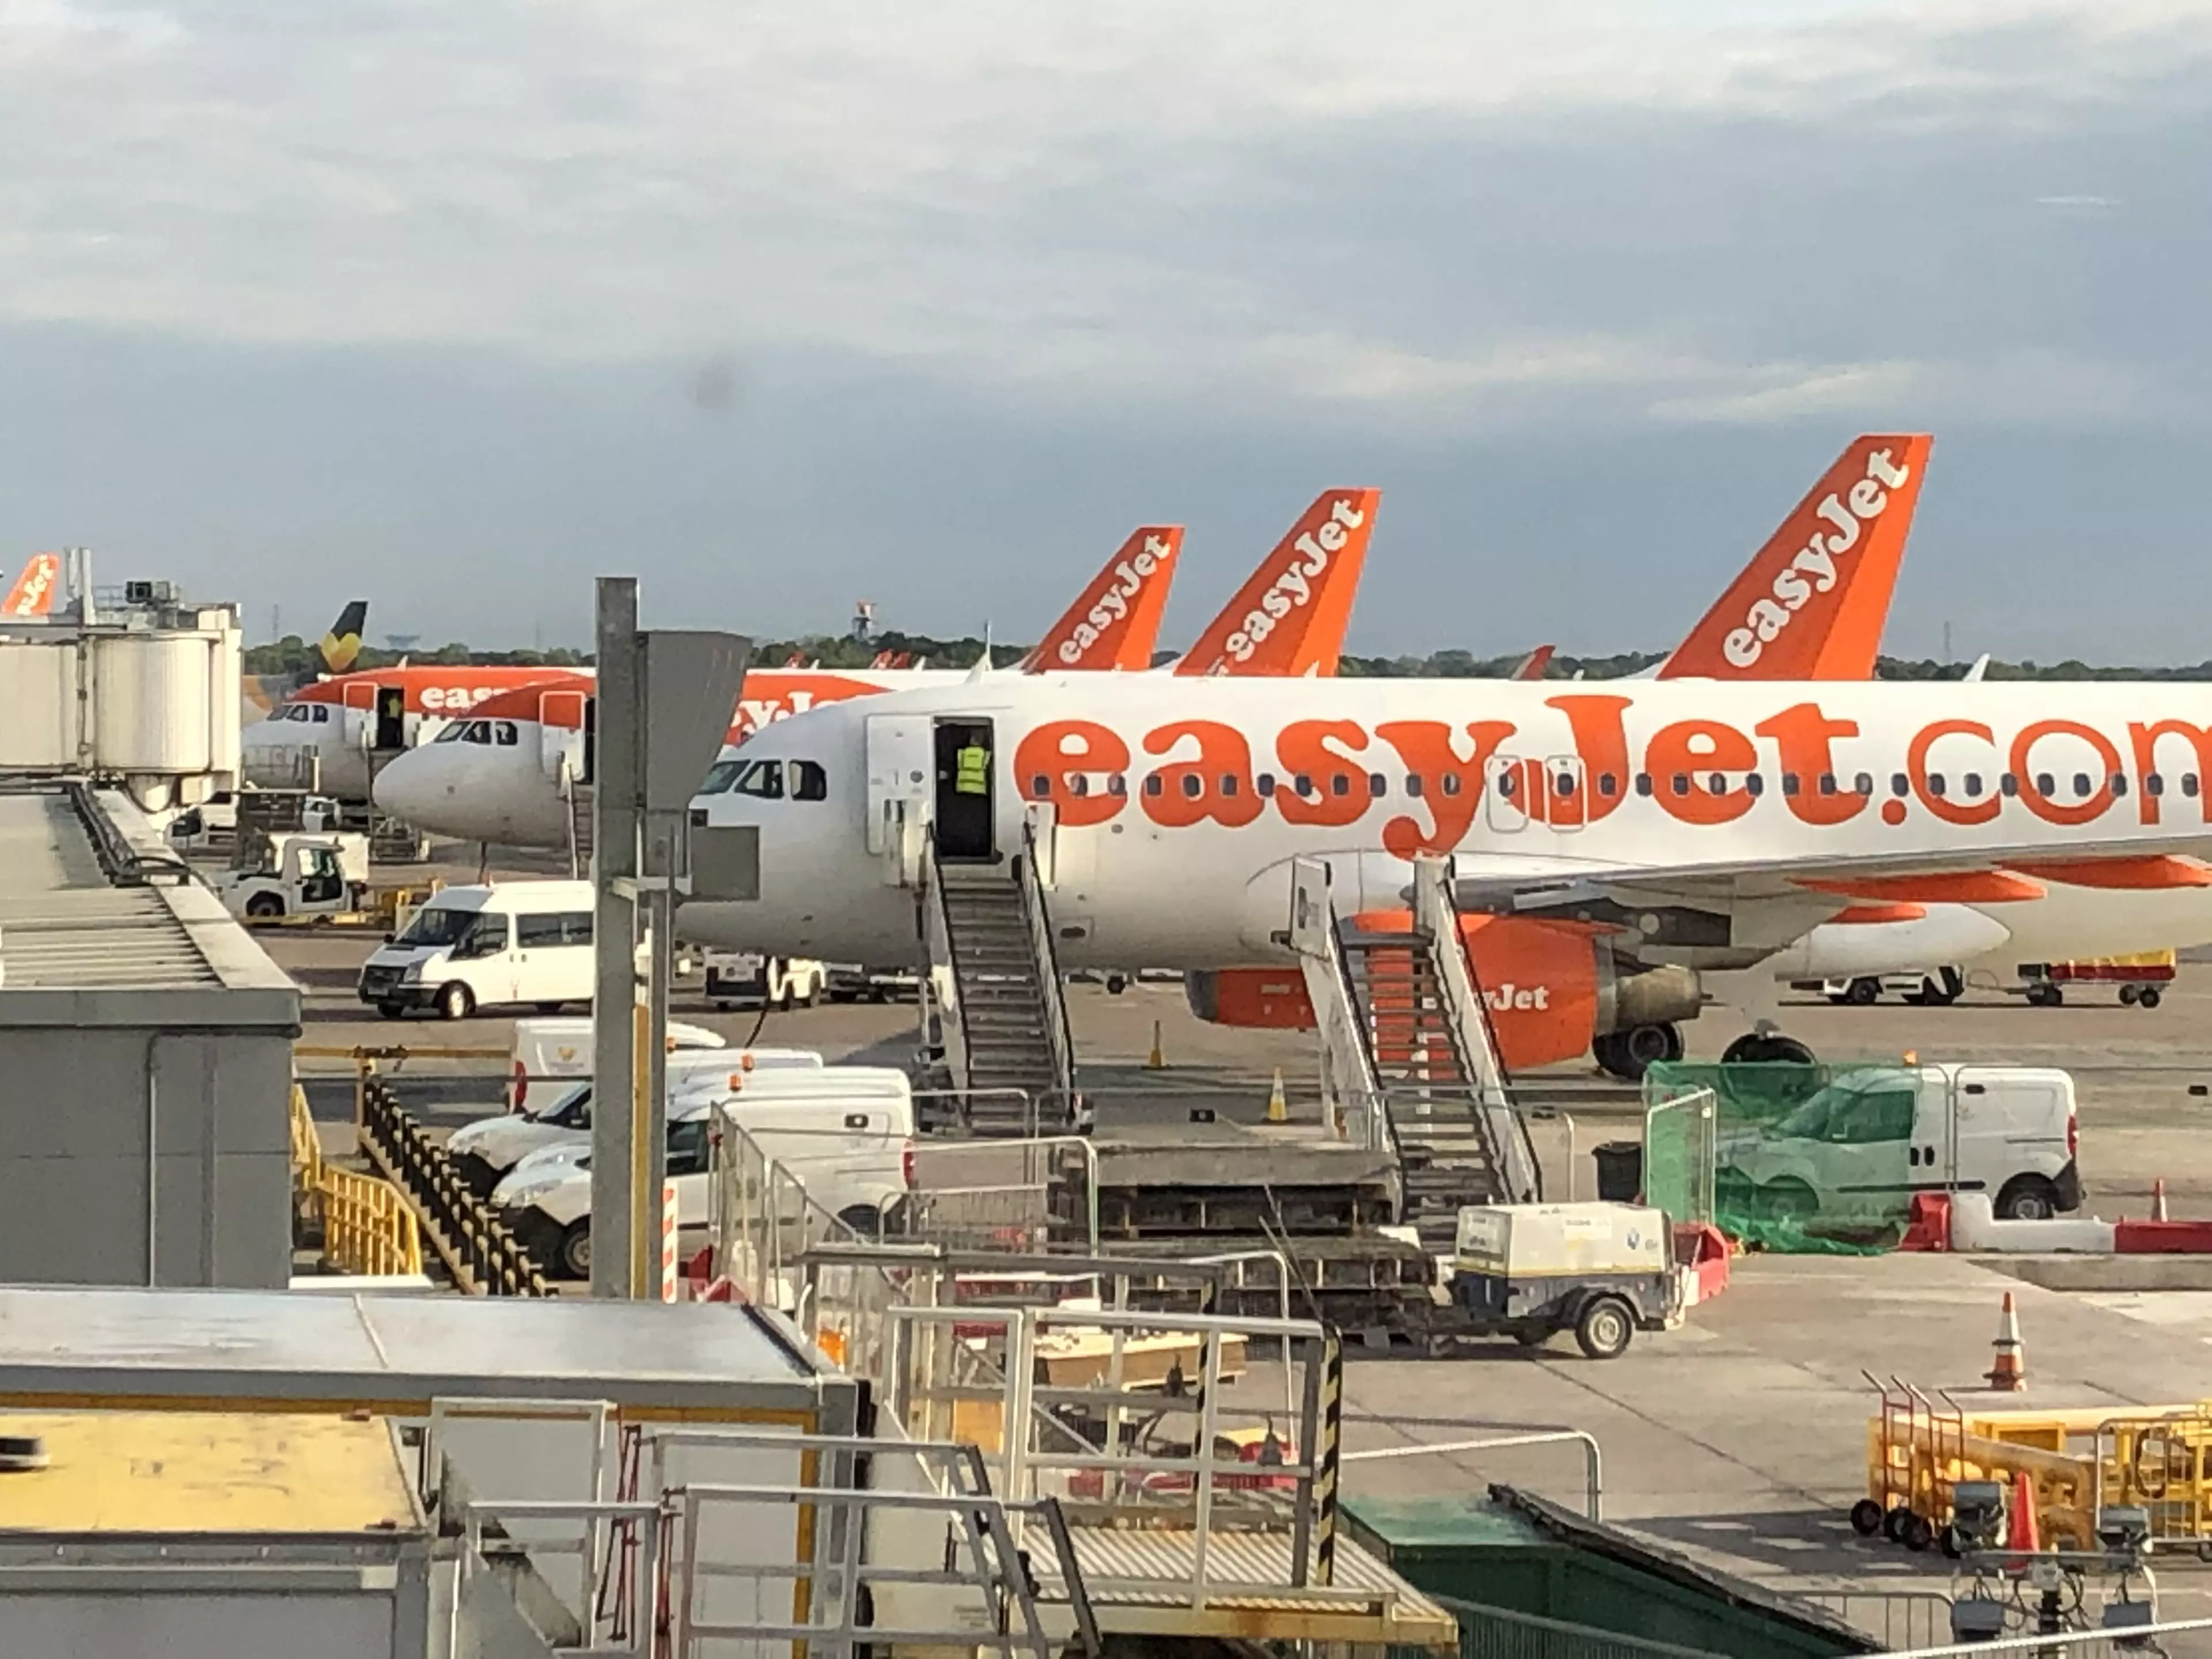 EasyJet aircraft at Manchester Airport.